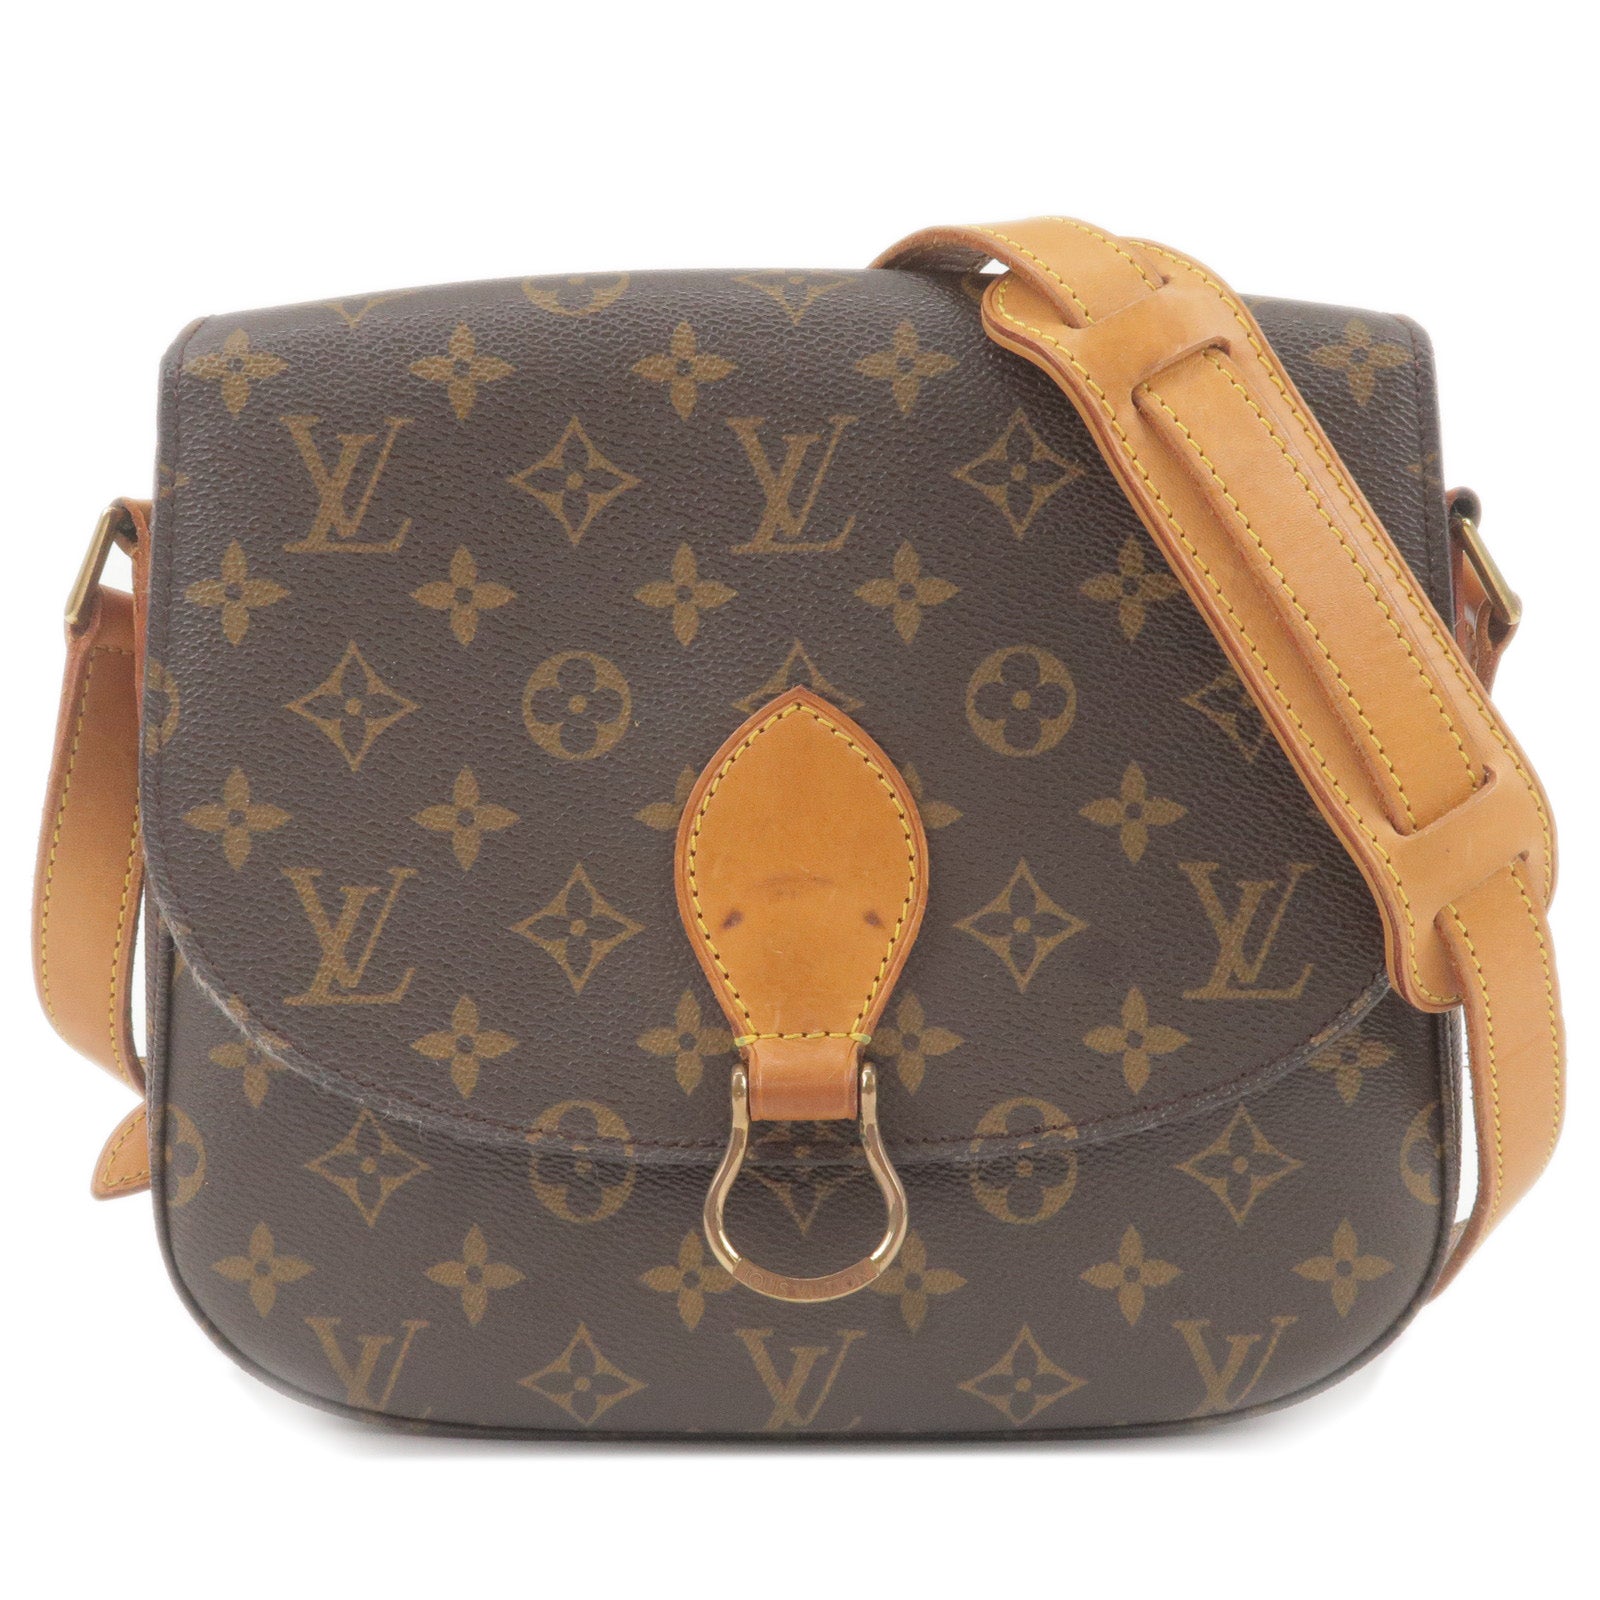 Monogram - Louis Vuitton Alma Pm Epi Leather Bag - owned PM Noé